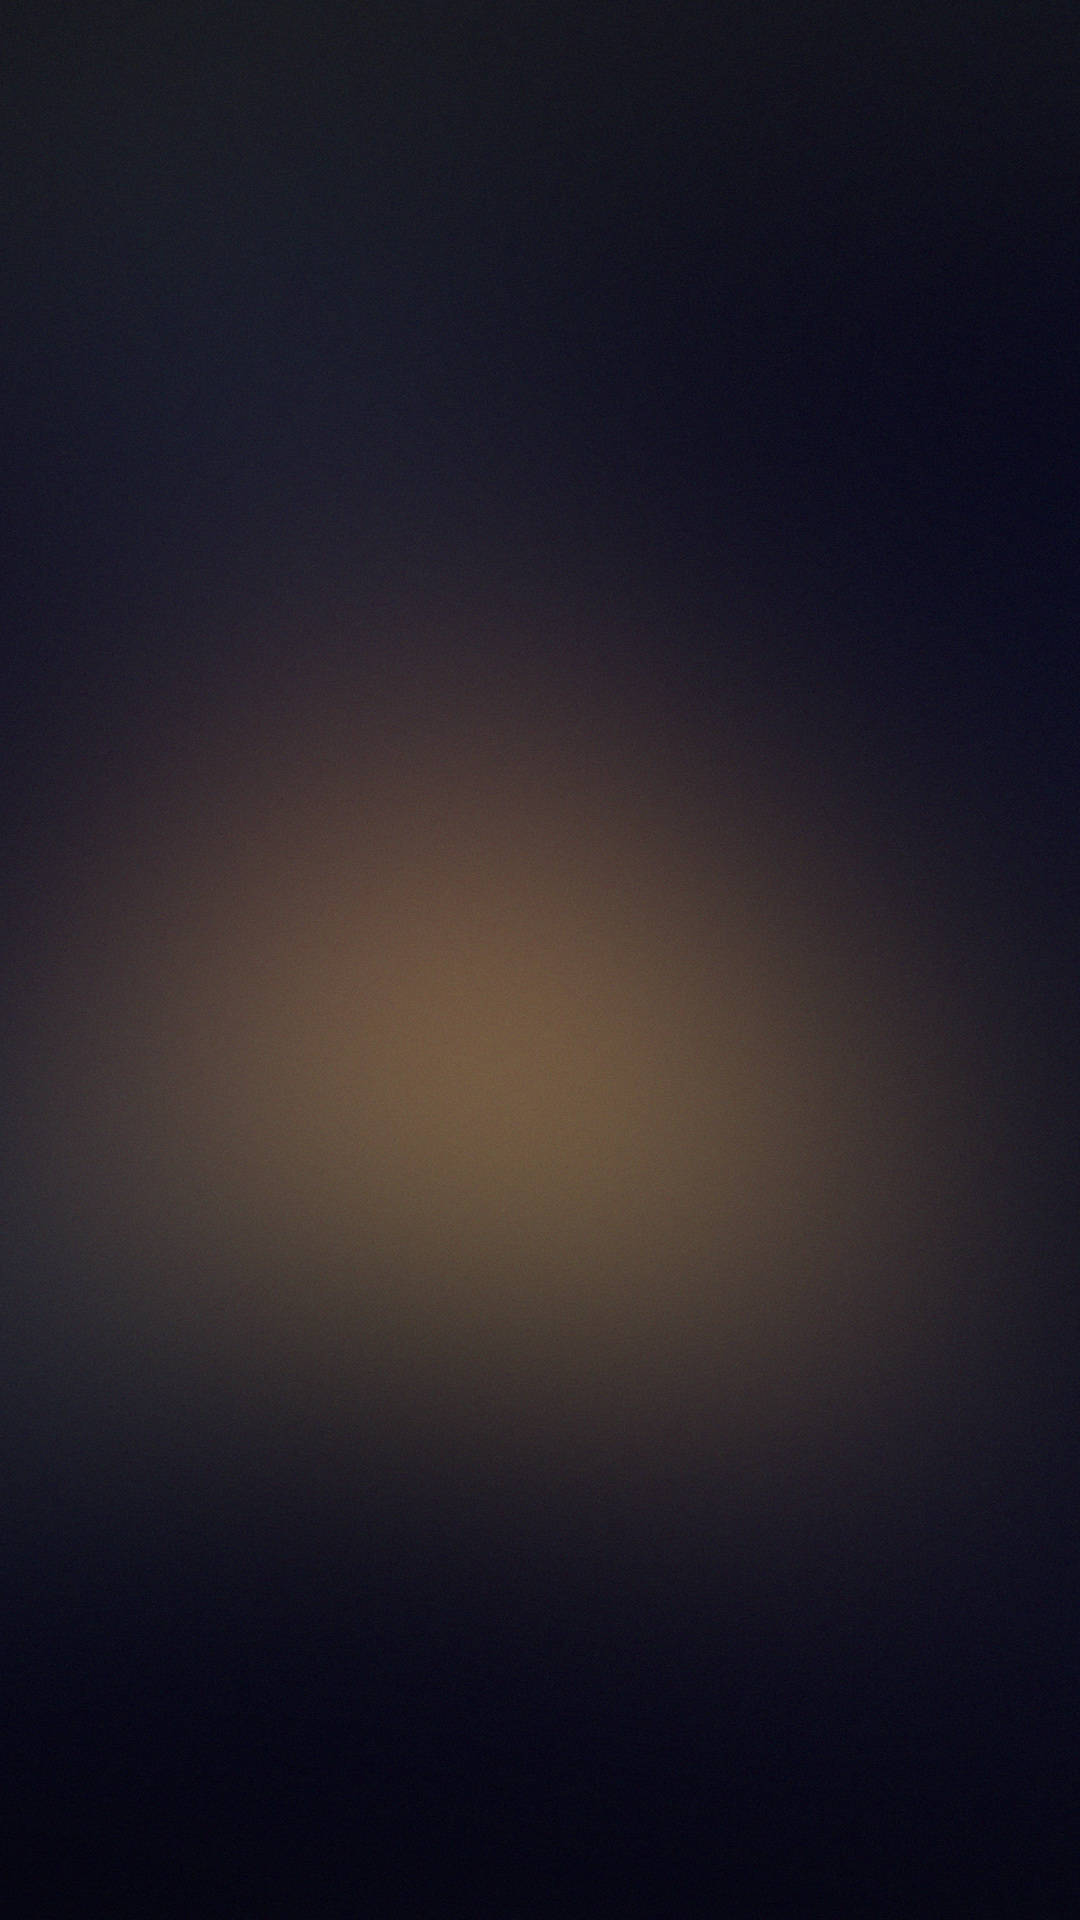 Abstract Brownish Black Minimal Dark Iphone Wallpaper